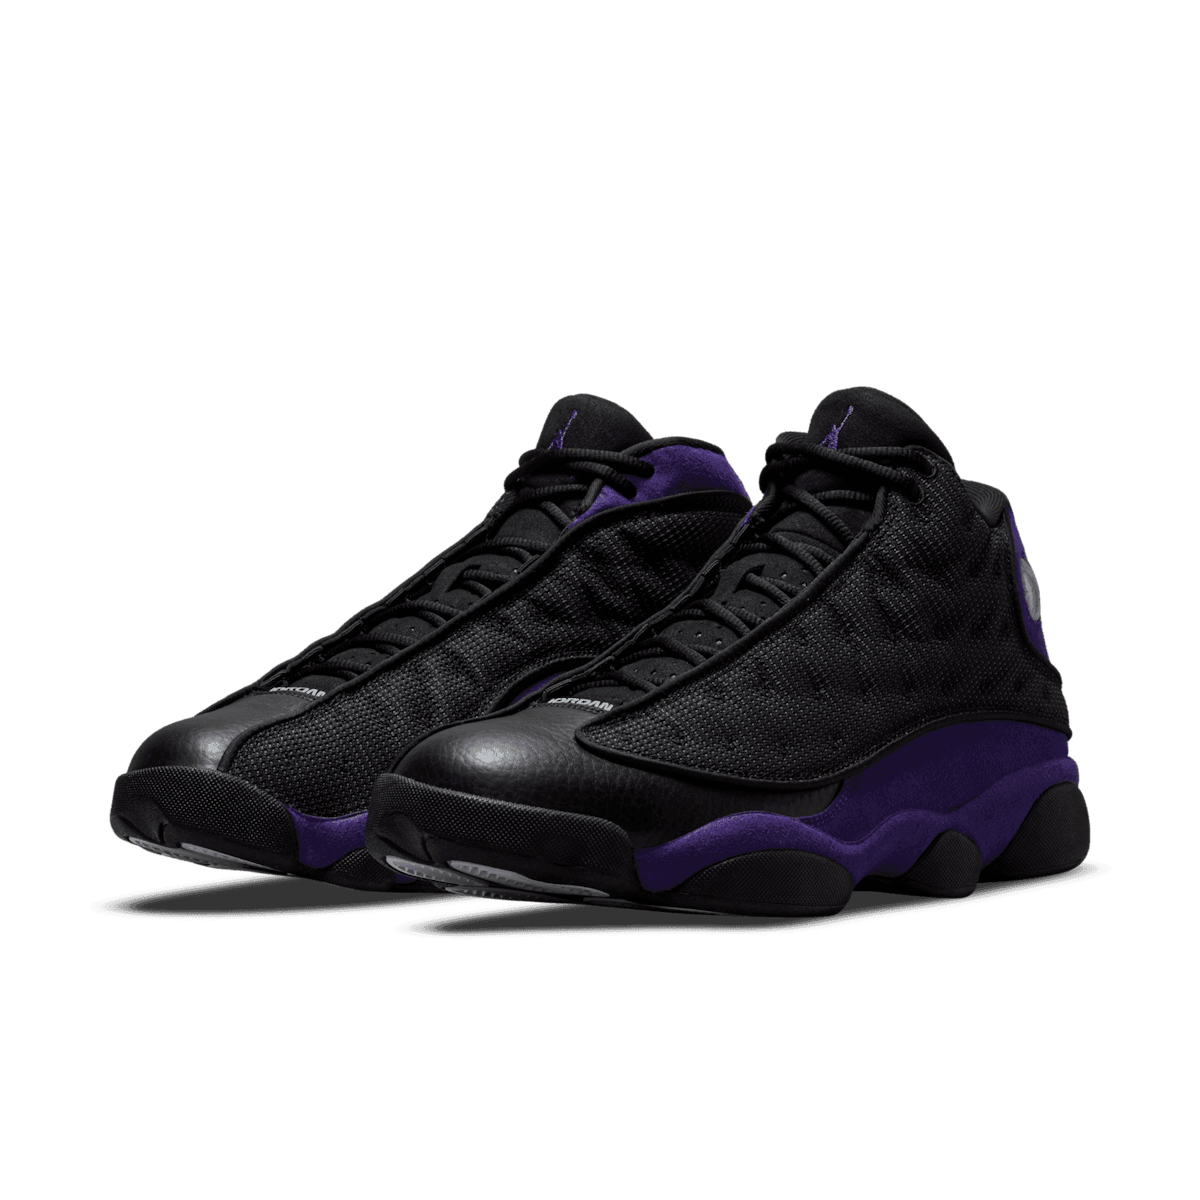 Jordan 13 Court Purple Angle 2